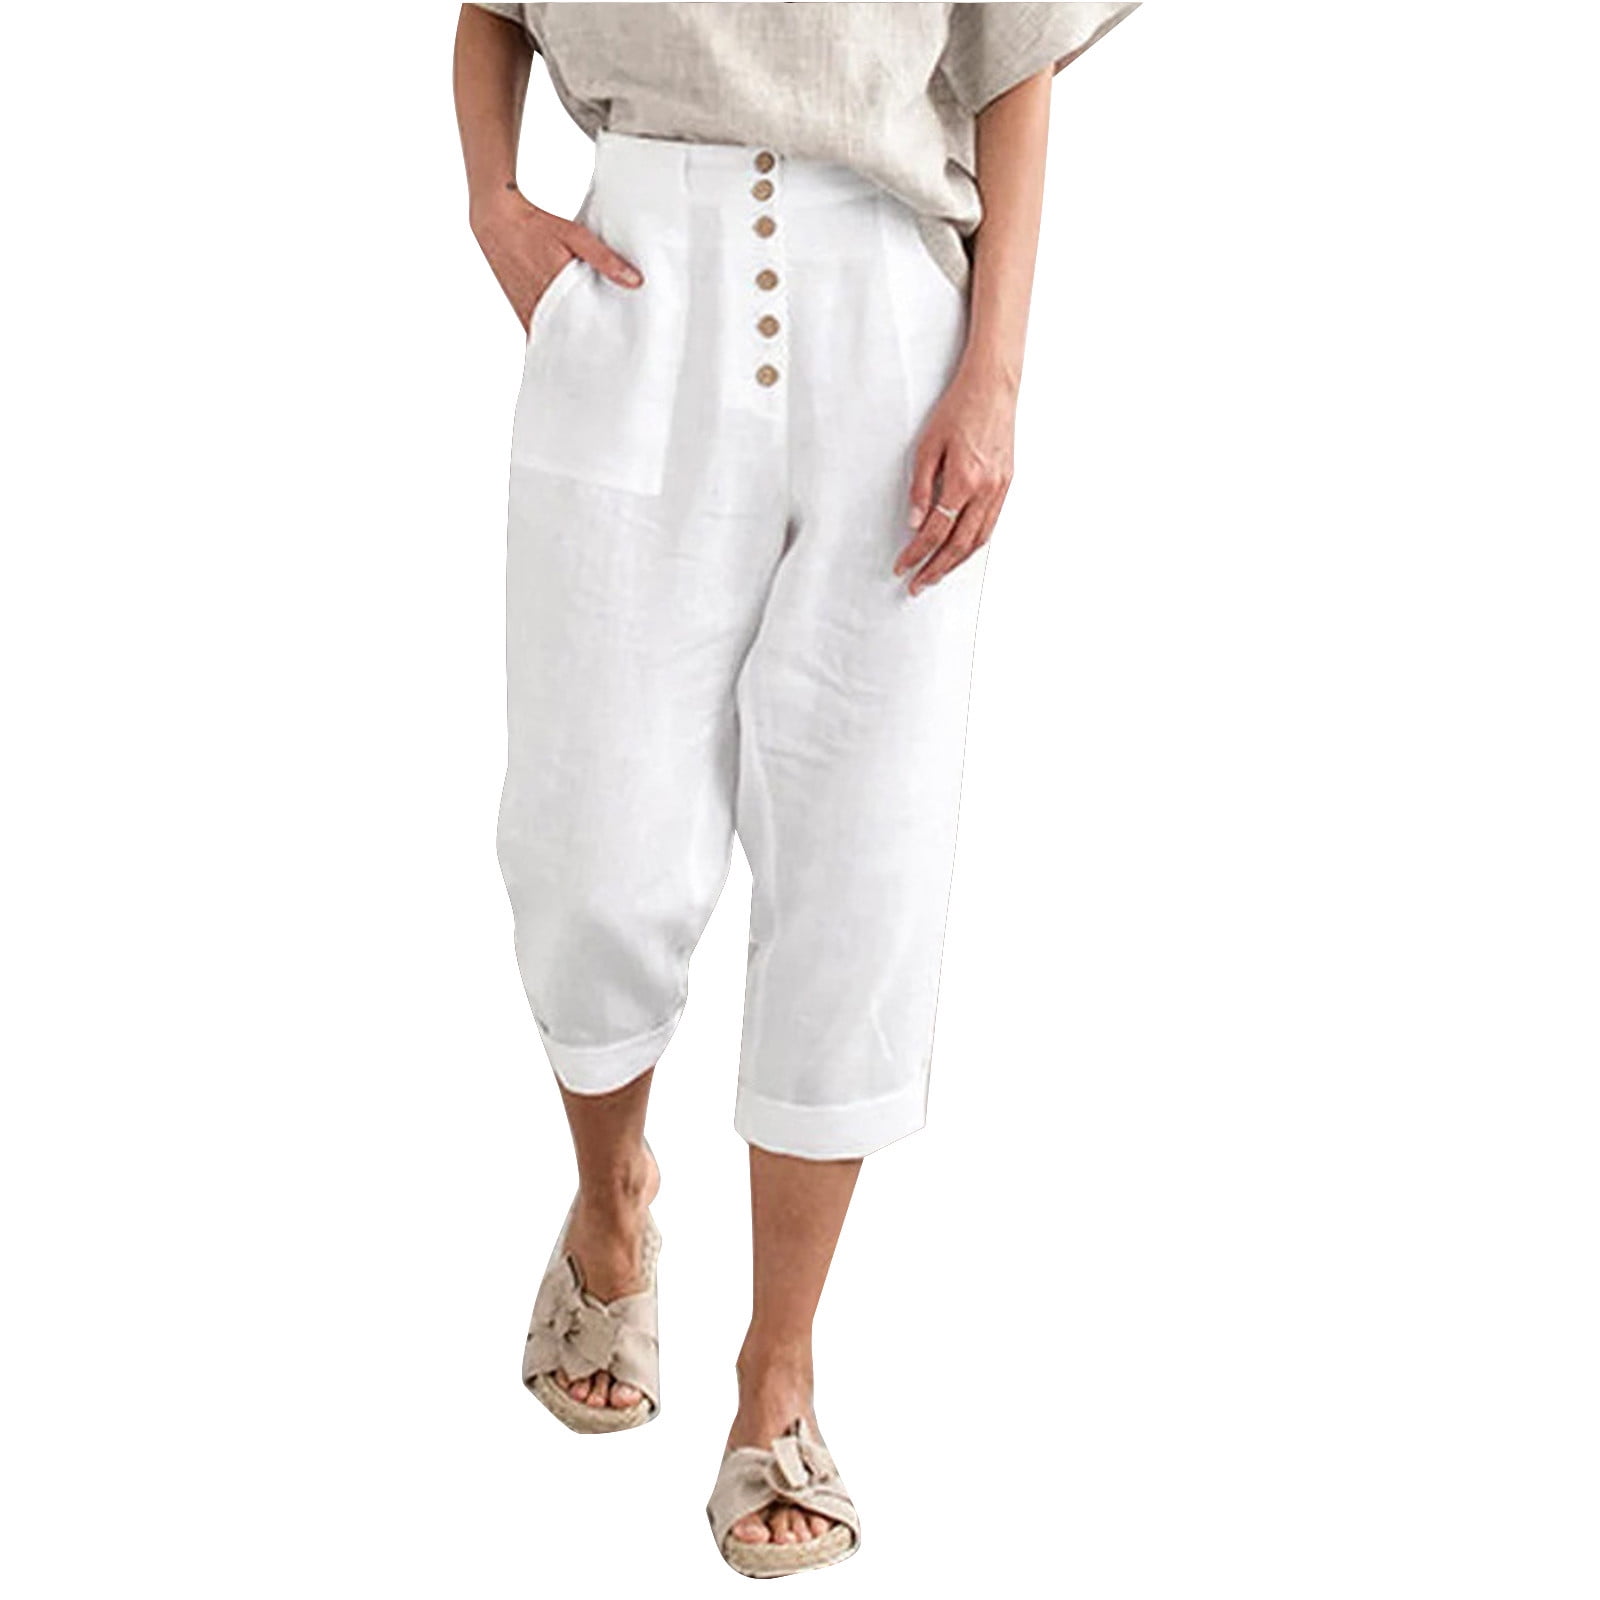 zuwimk Womens Pants,Women's Relaxed Fit All Day Straight Leg Pant White,XL  - Walmart.com